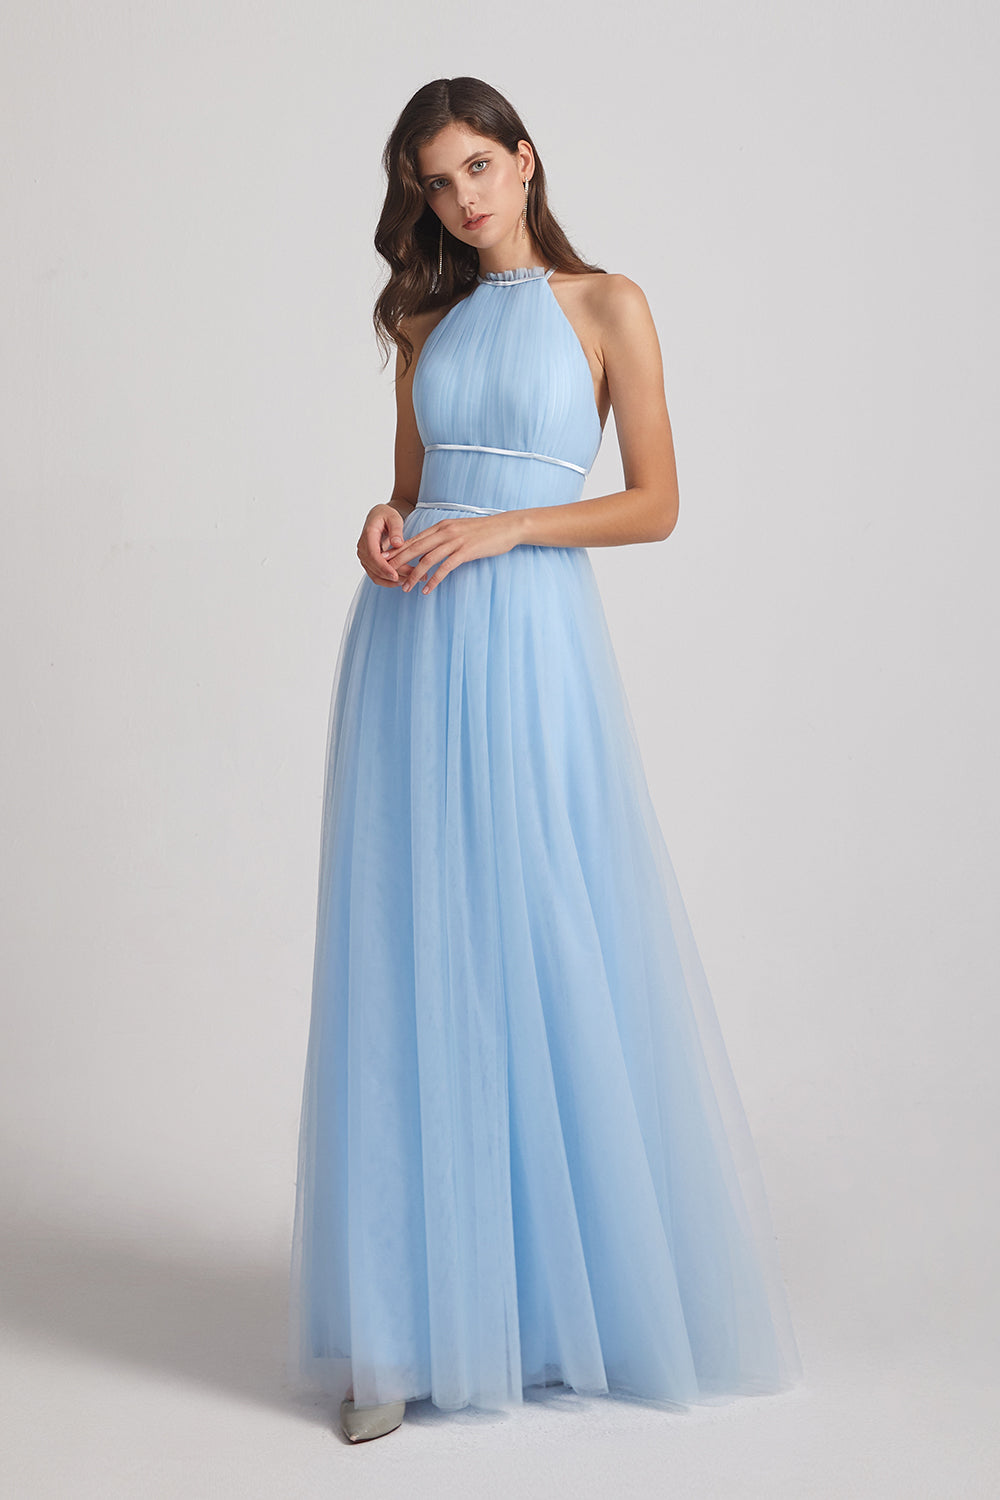 floor length blue tulle gowns